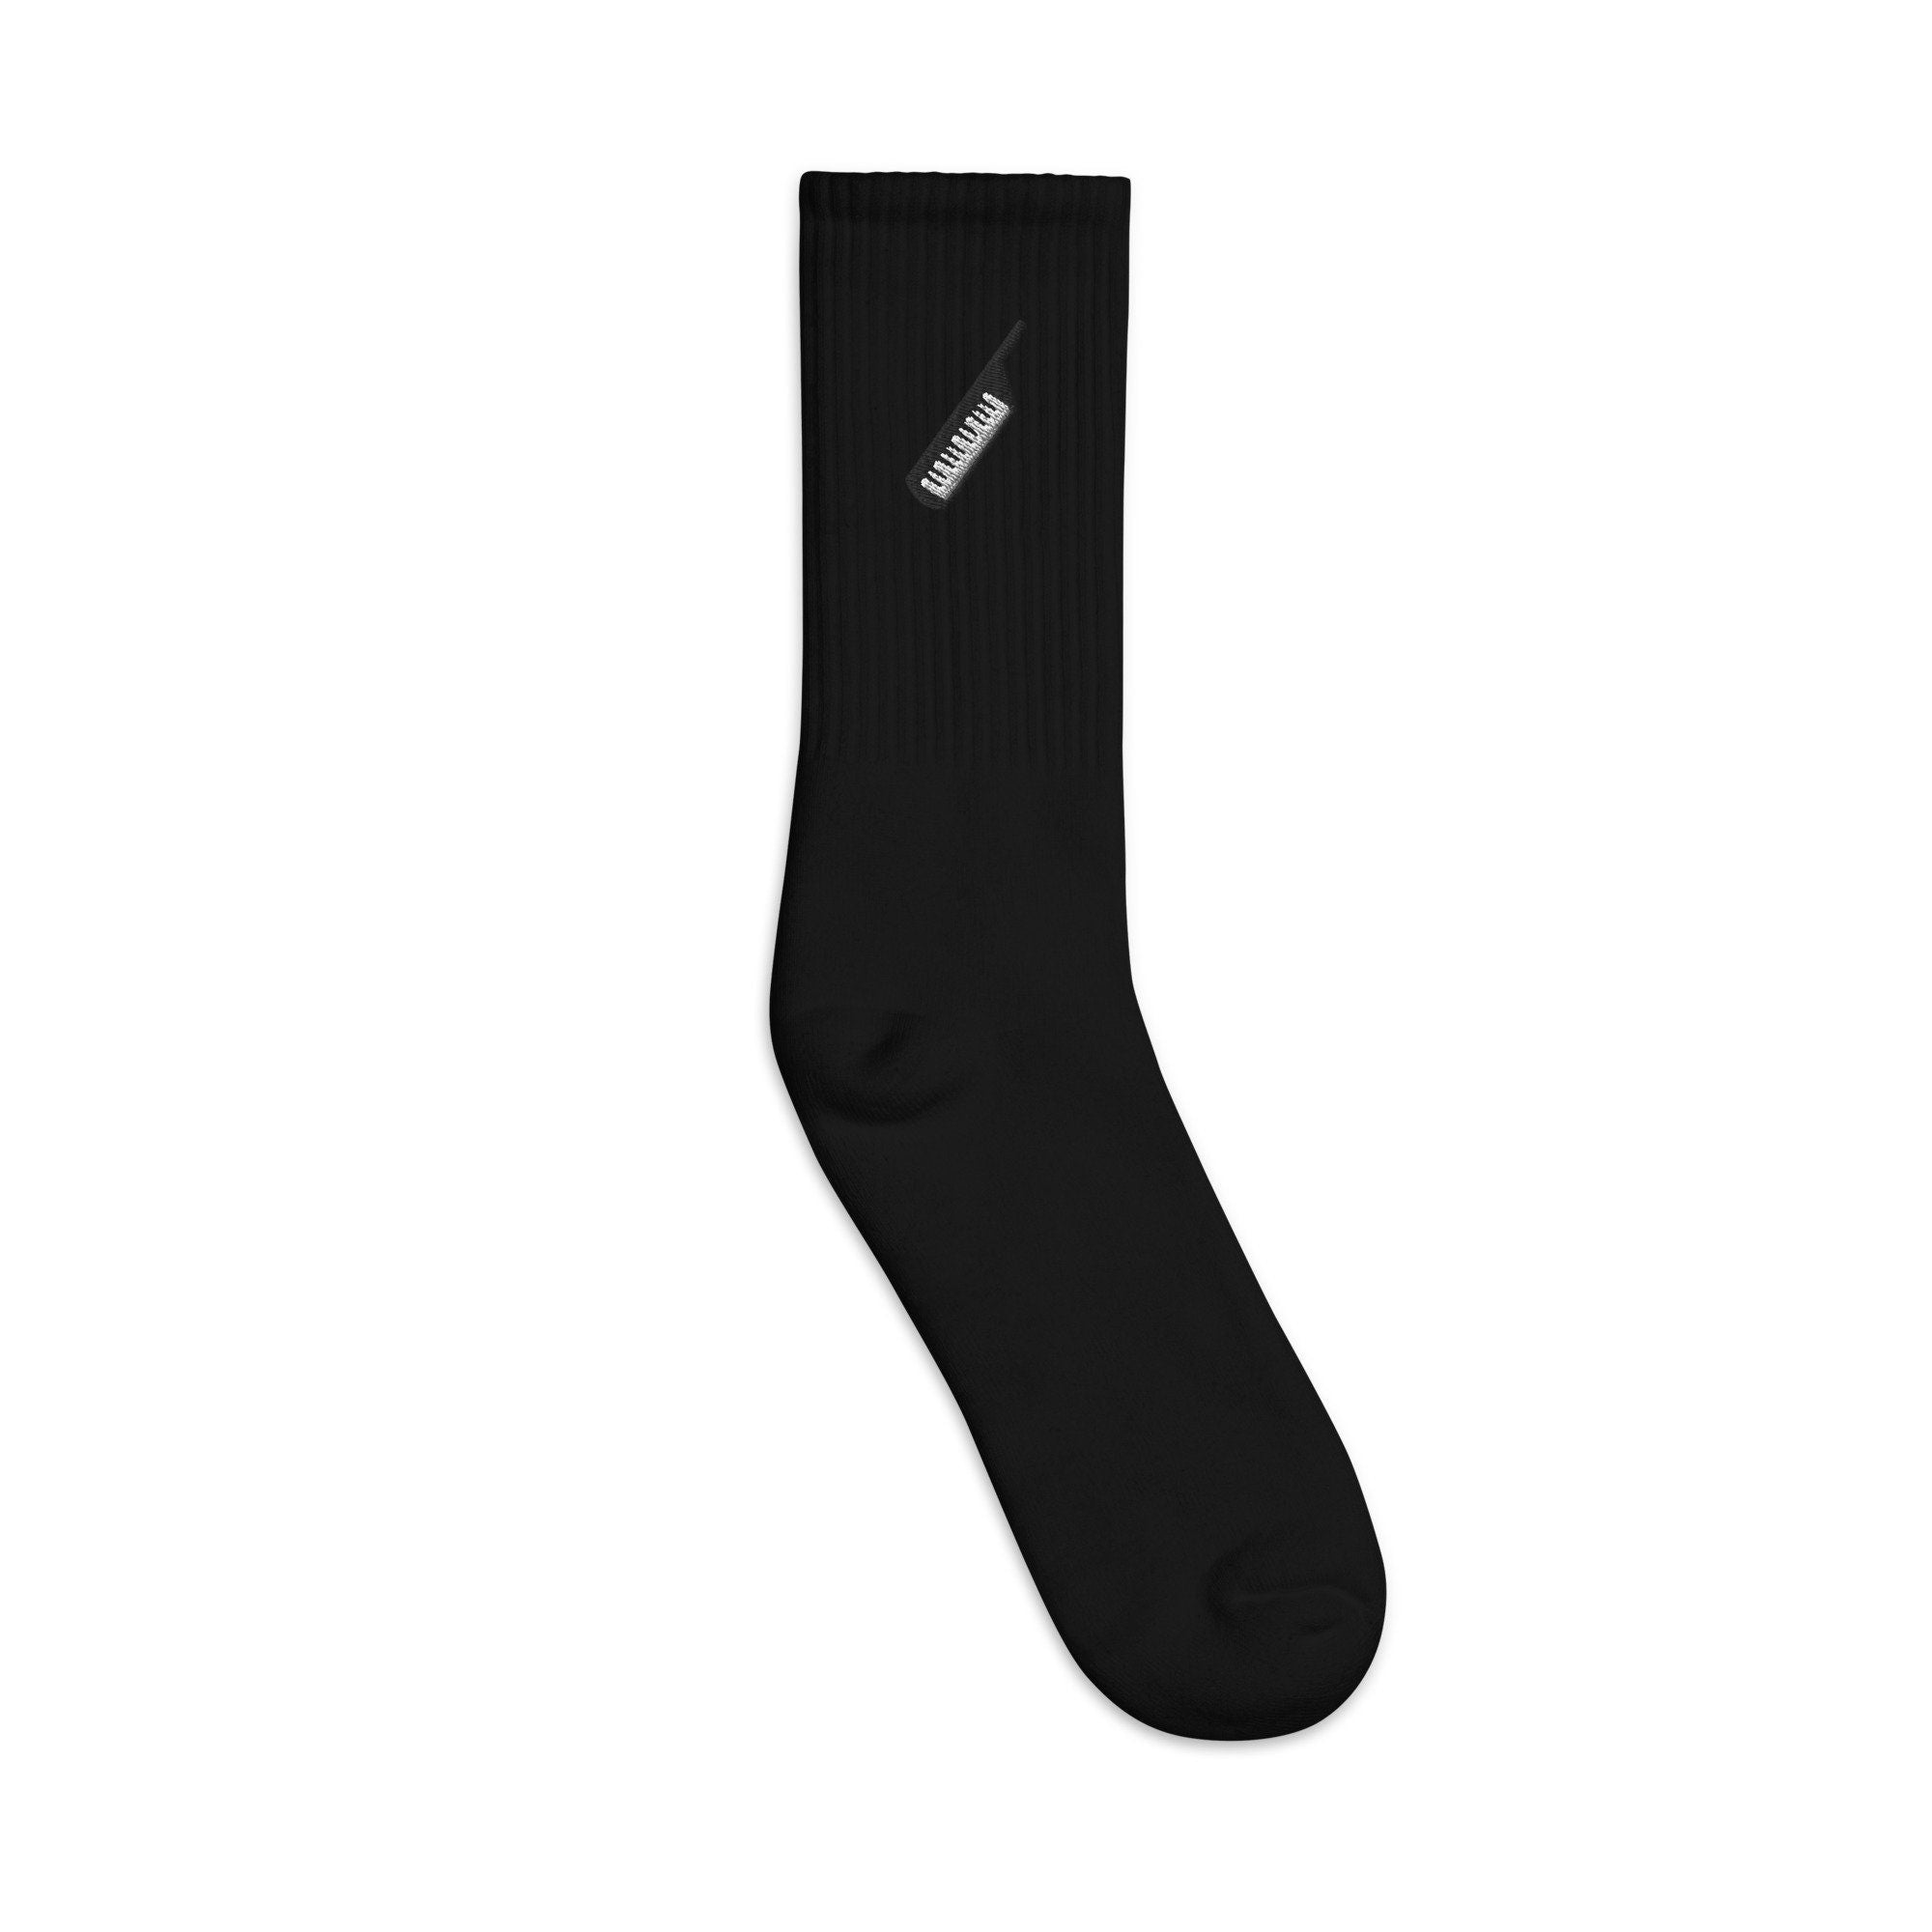 Keytar Embroidered Socks, Premium Embroidered Socks, Long Socks Gift - Multiple Colors